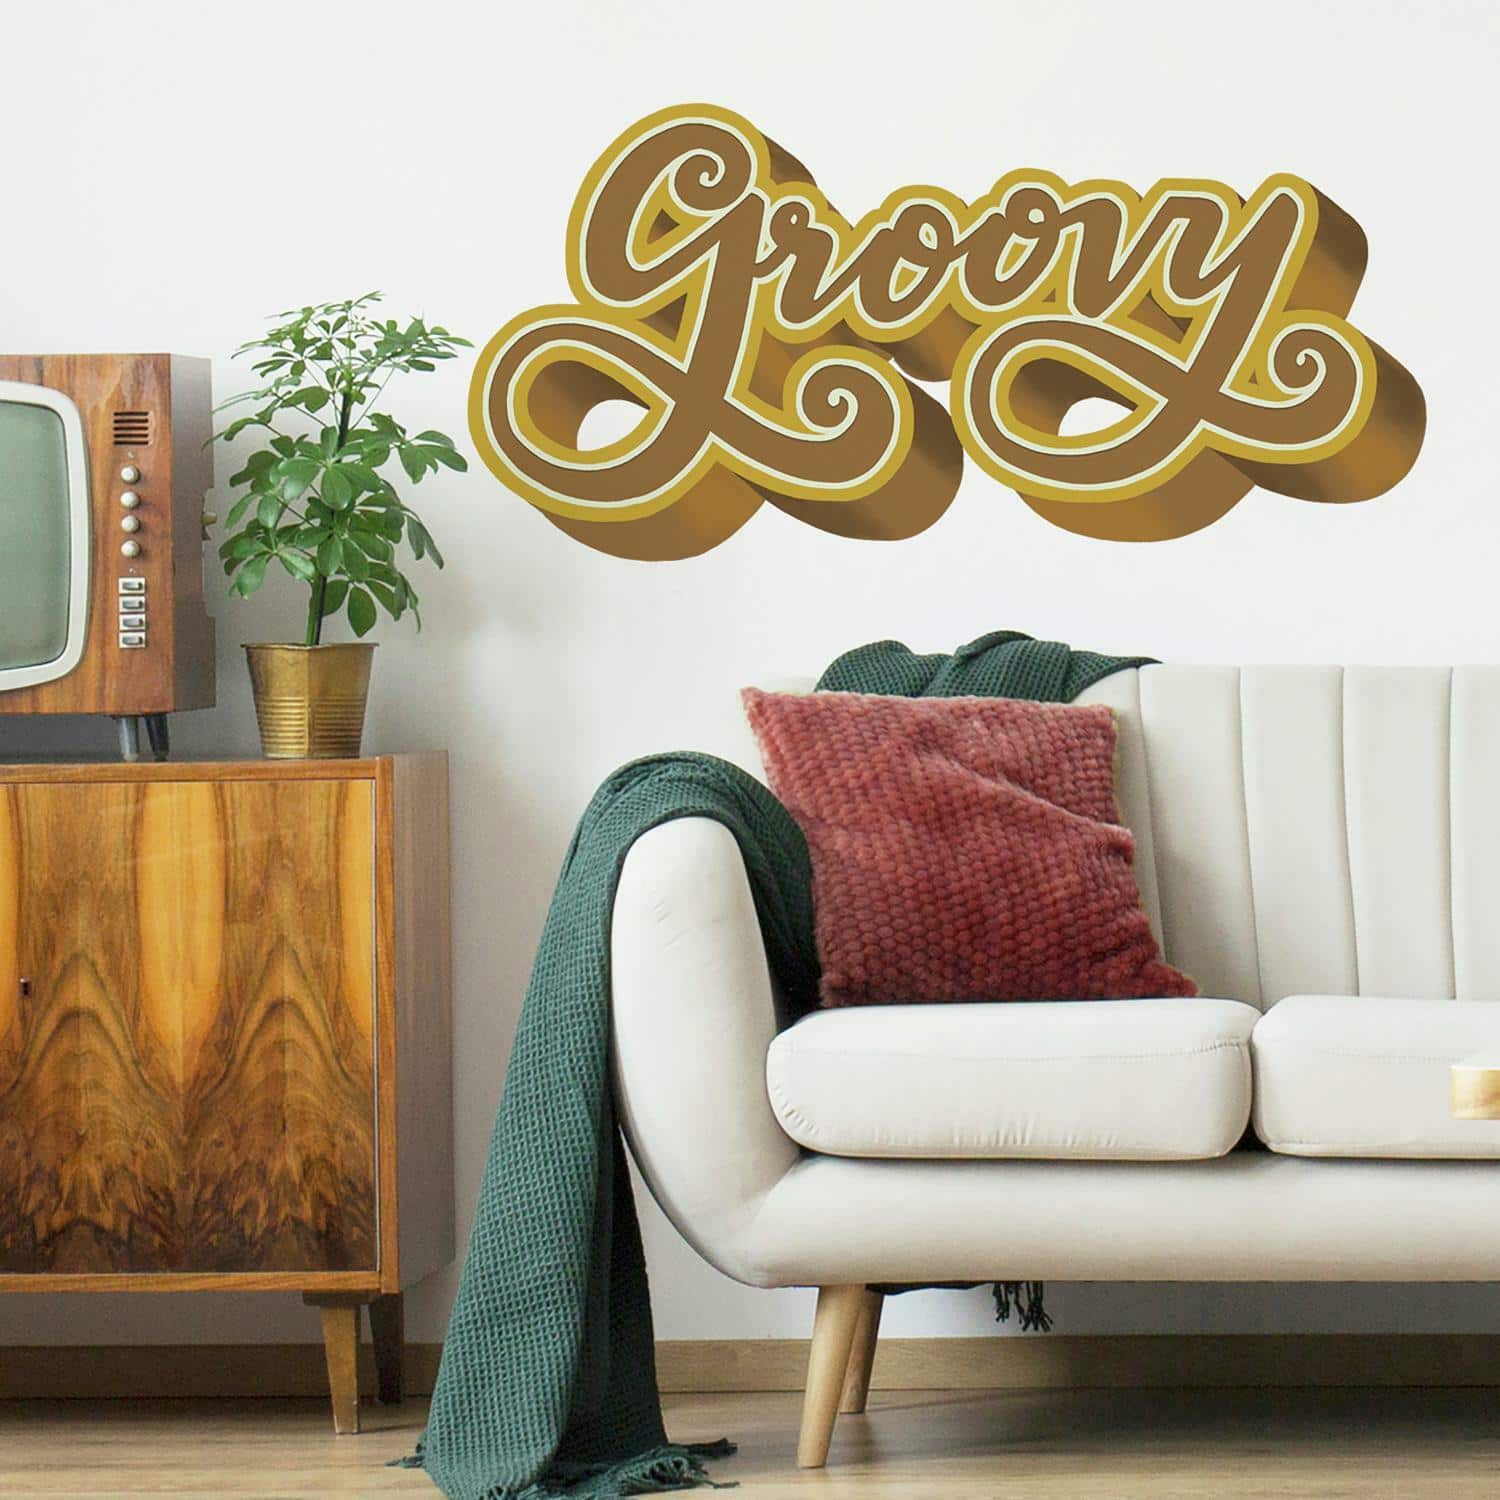 RoomMates Groovy Retro Peel &#x26; Stick Giant Wall Decal